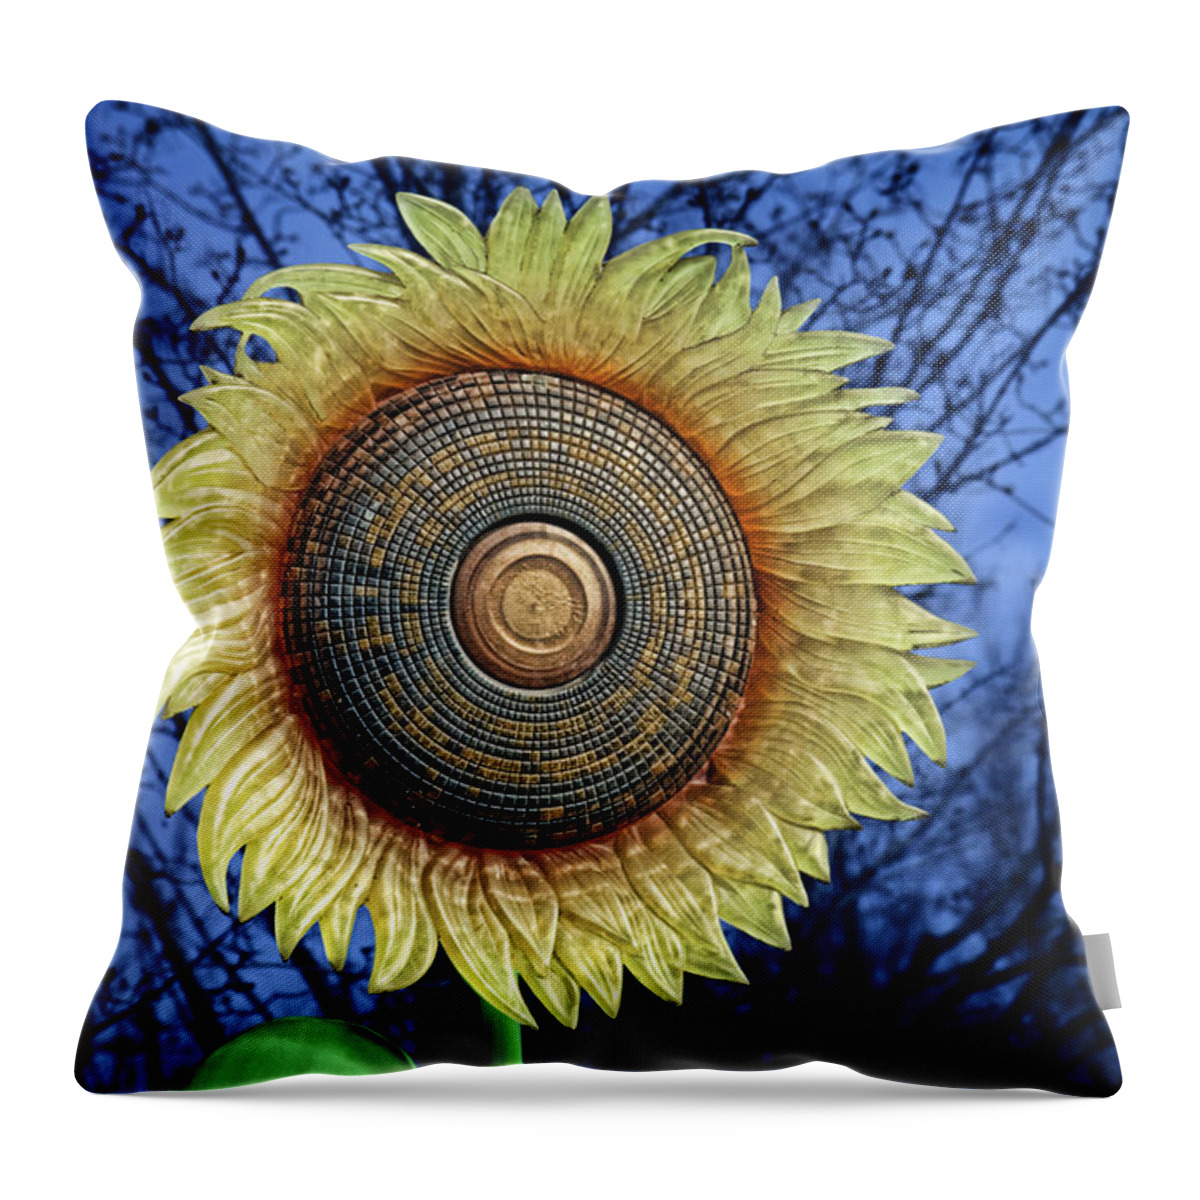 Sunflower Throw Pillow featuring the photograph Stylized Sunflower by Tom Mc Nemar